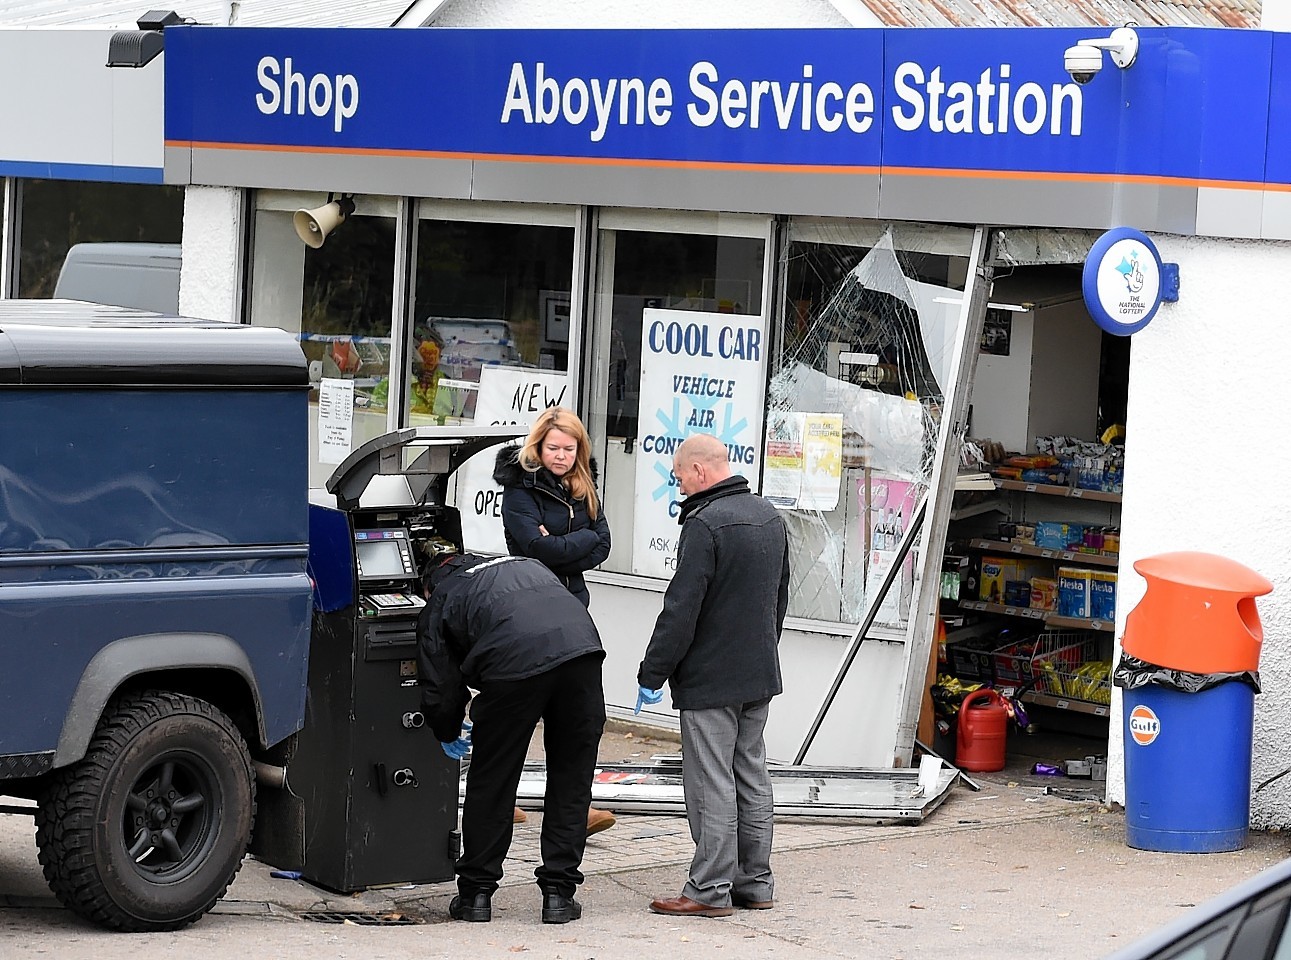 The scene of the cash machine raid in Aboyne